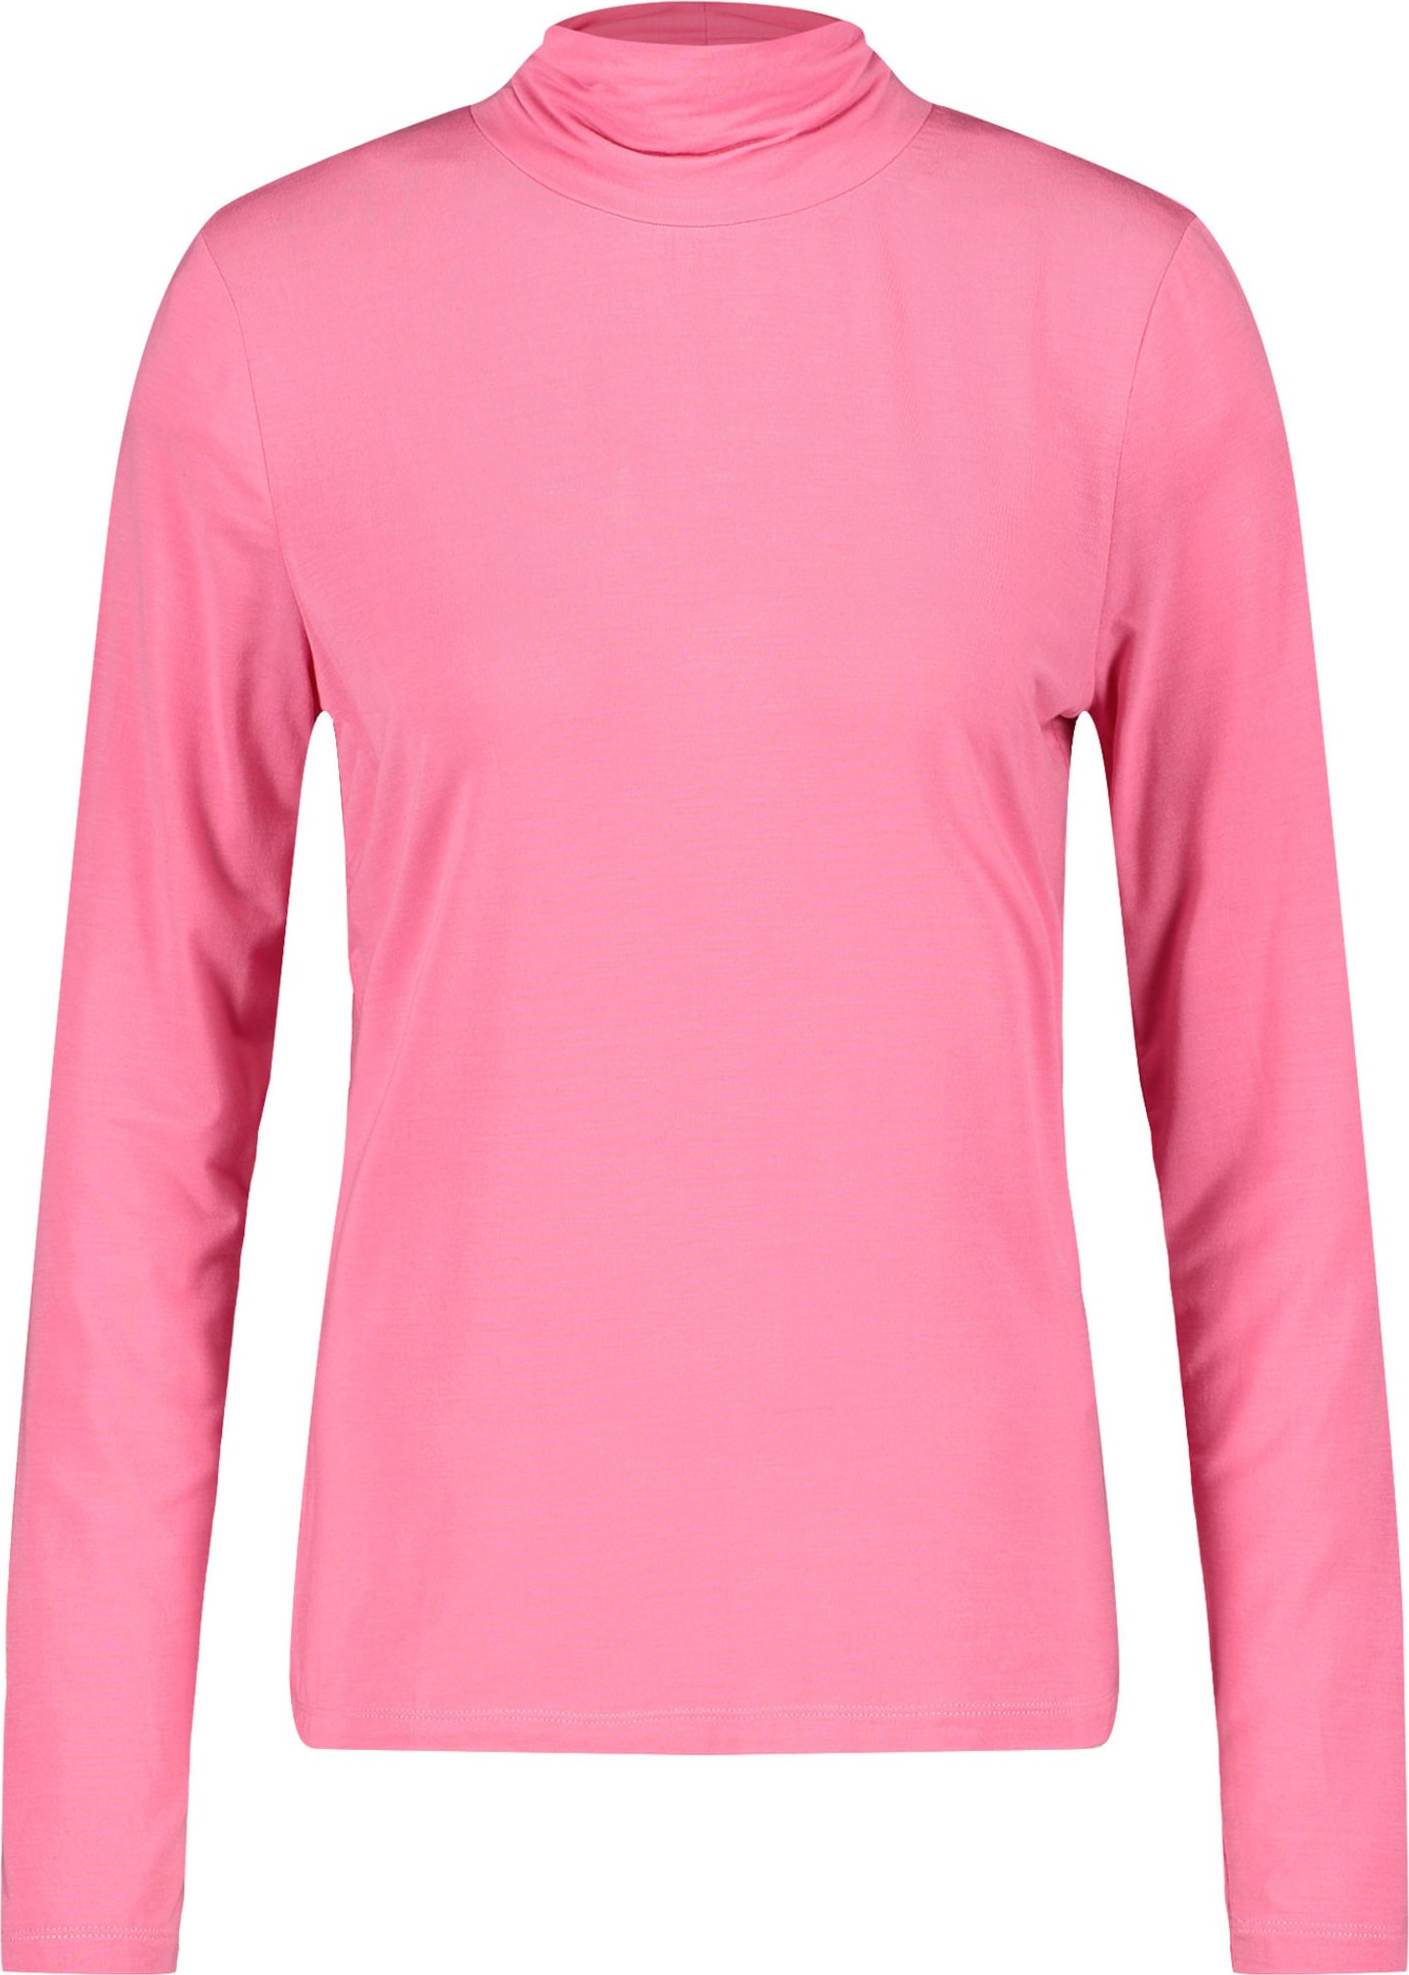 GERRY WEBER Tričko pink